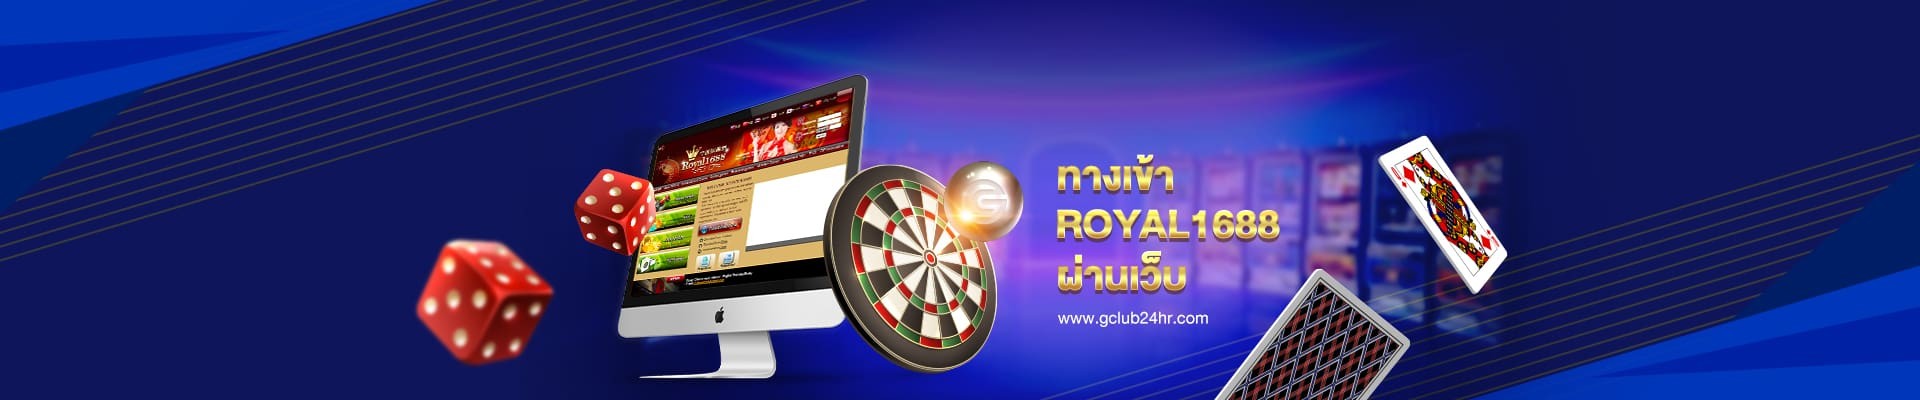 gclub24hr_casino_online_royal1688_play_on_website